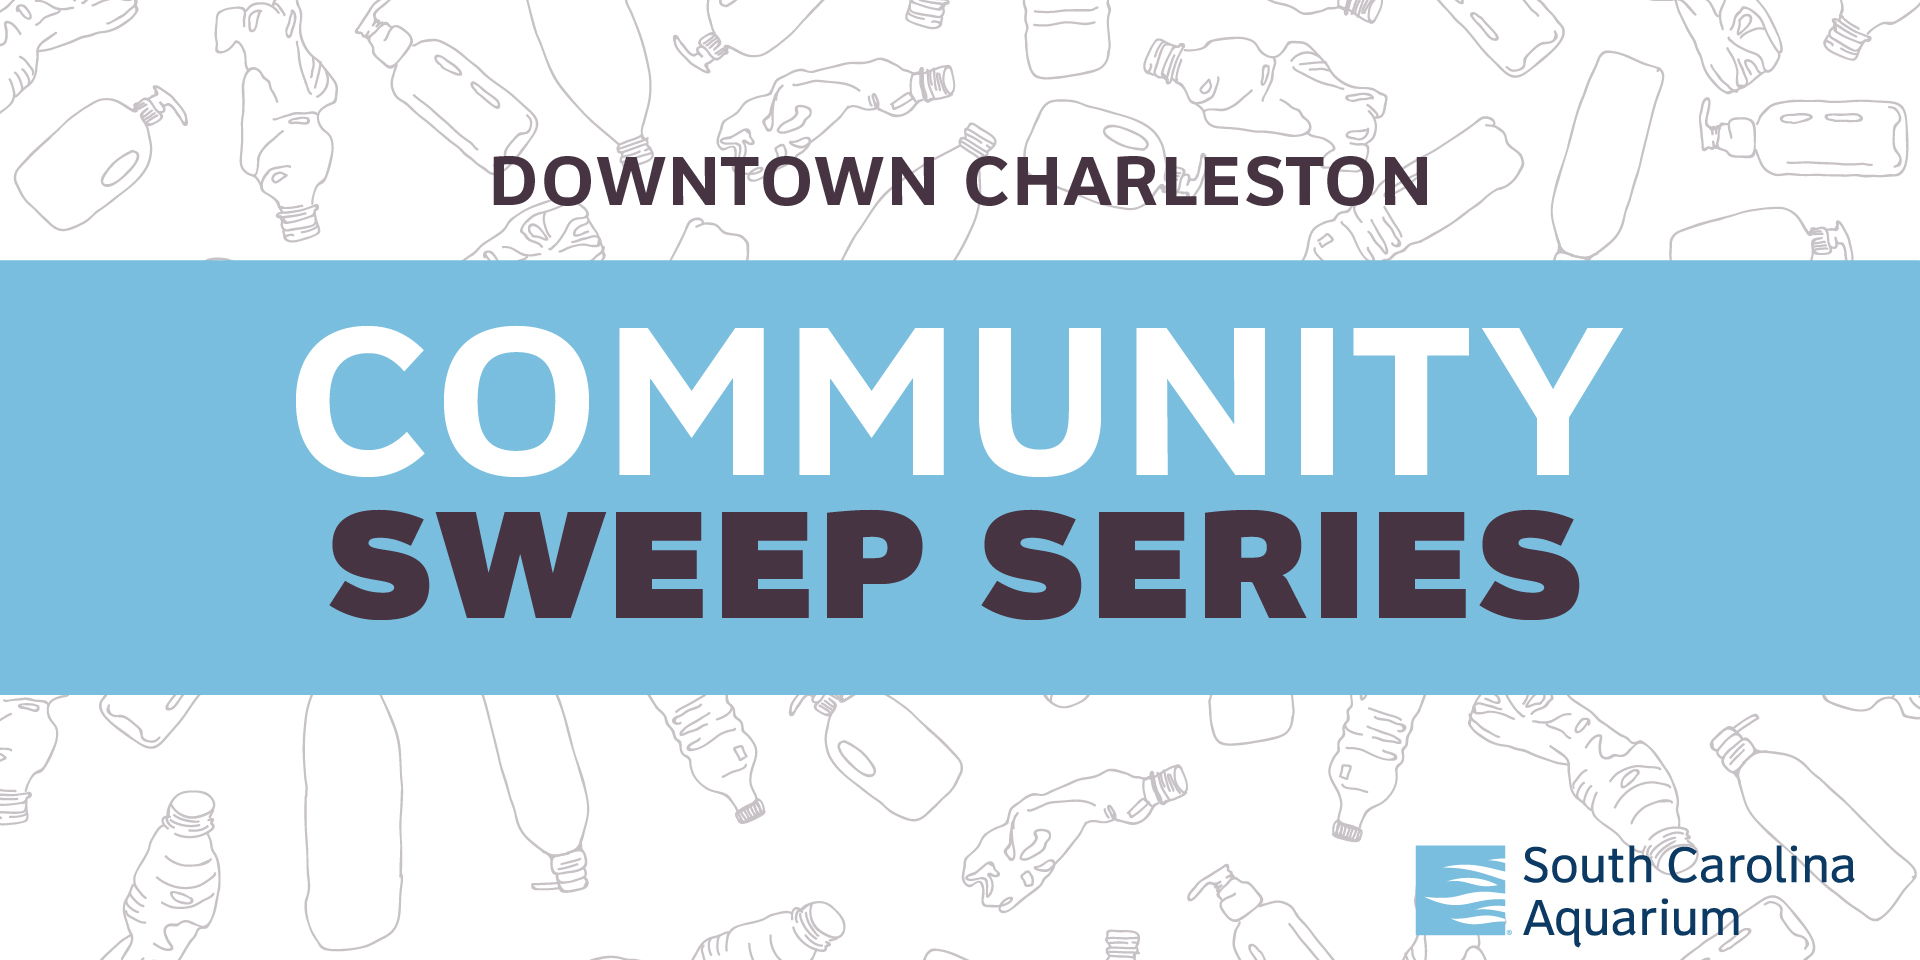 South Carolina Aquarium Litter Sweep: DOWNTOWN CHARLESTON COMMUNITY SWEEP SERIES KICKOFF promotional image